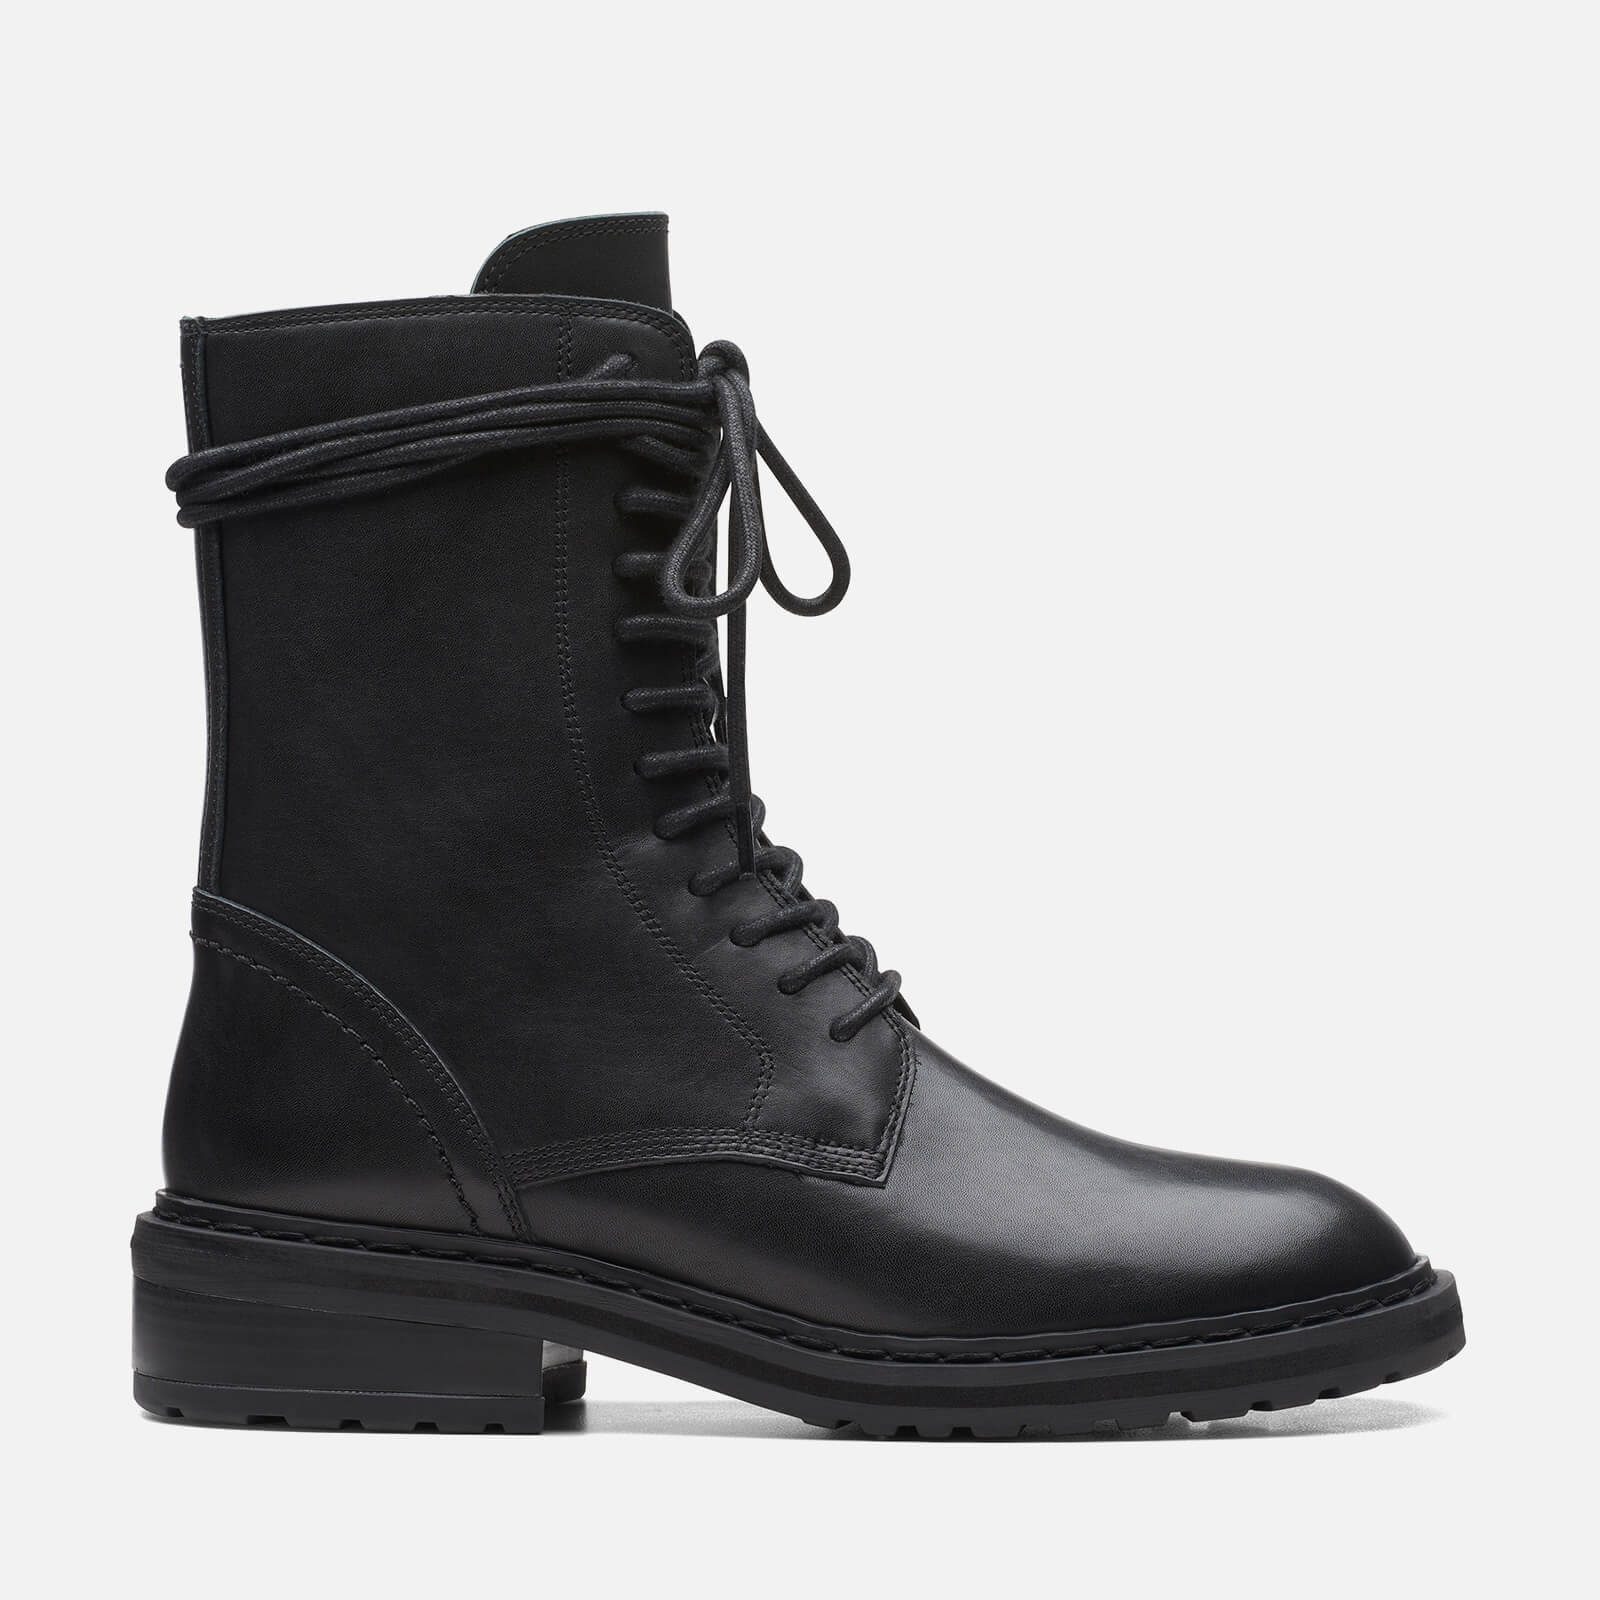 Clarks Tilham Lace Up Leather Boots - Uk 7